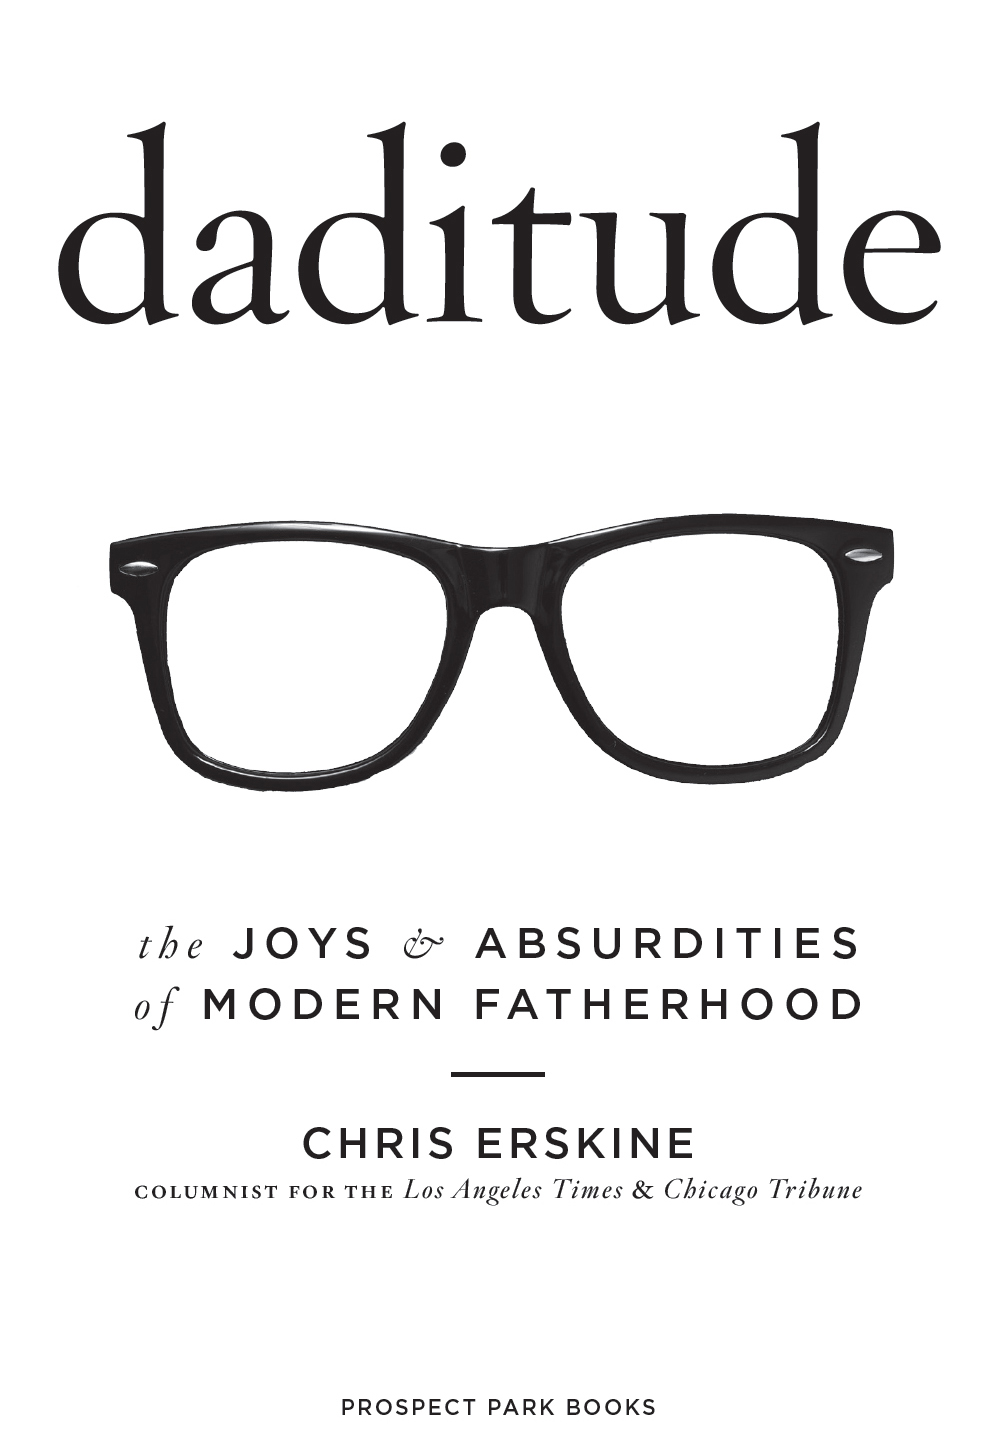 Daditude the joys absurdities of modern fatherhood - image 3